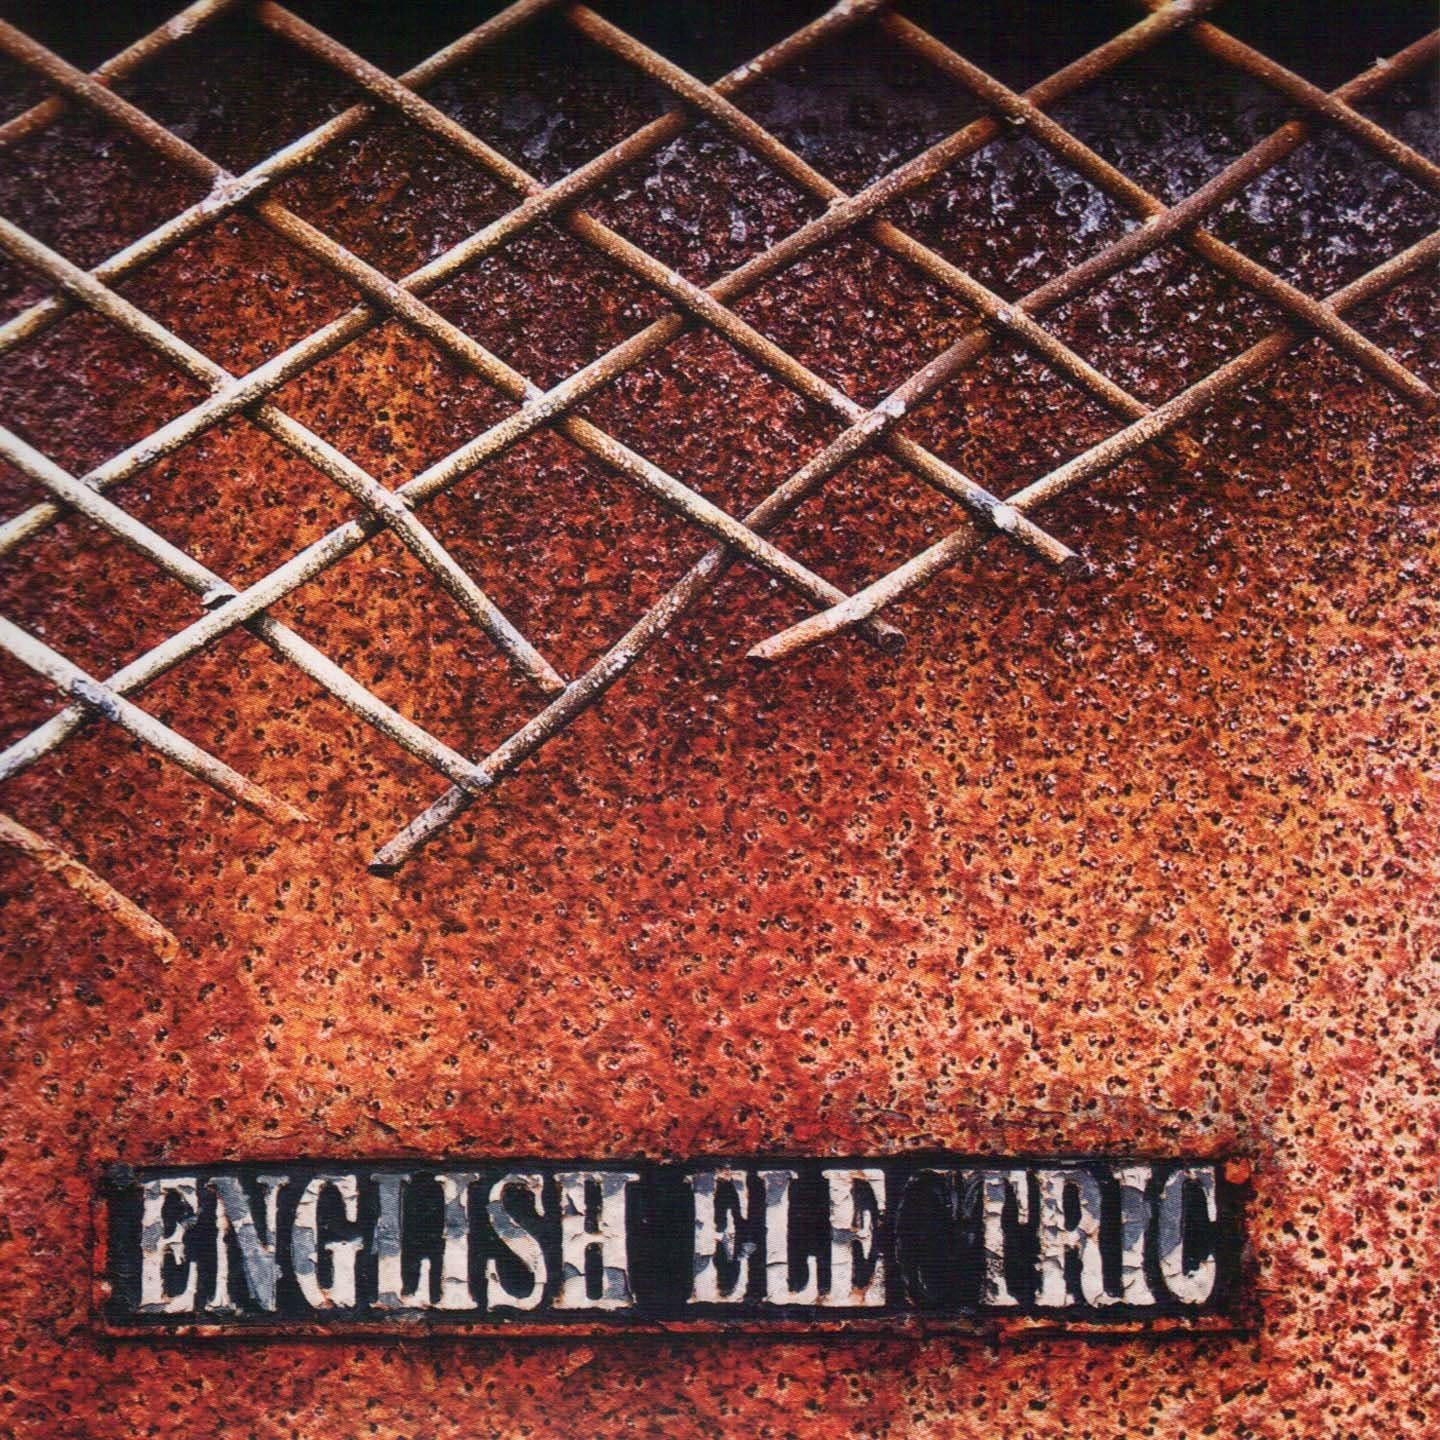 Big Big Train - English Electric Part Two : CD